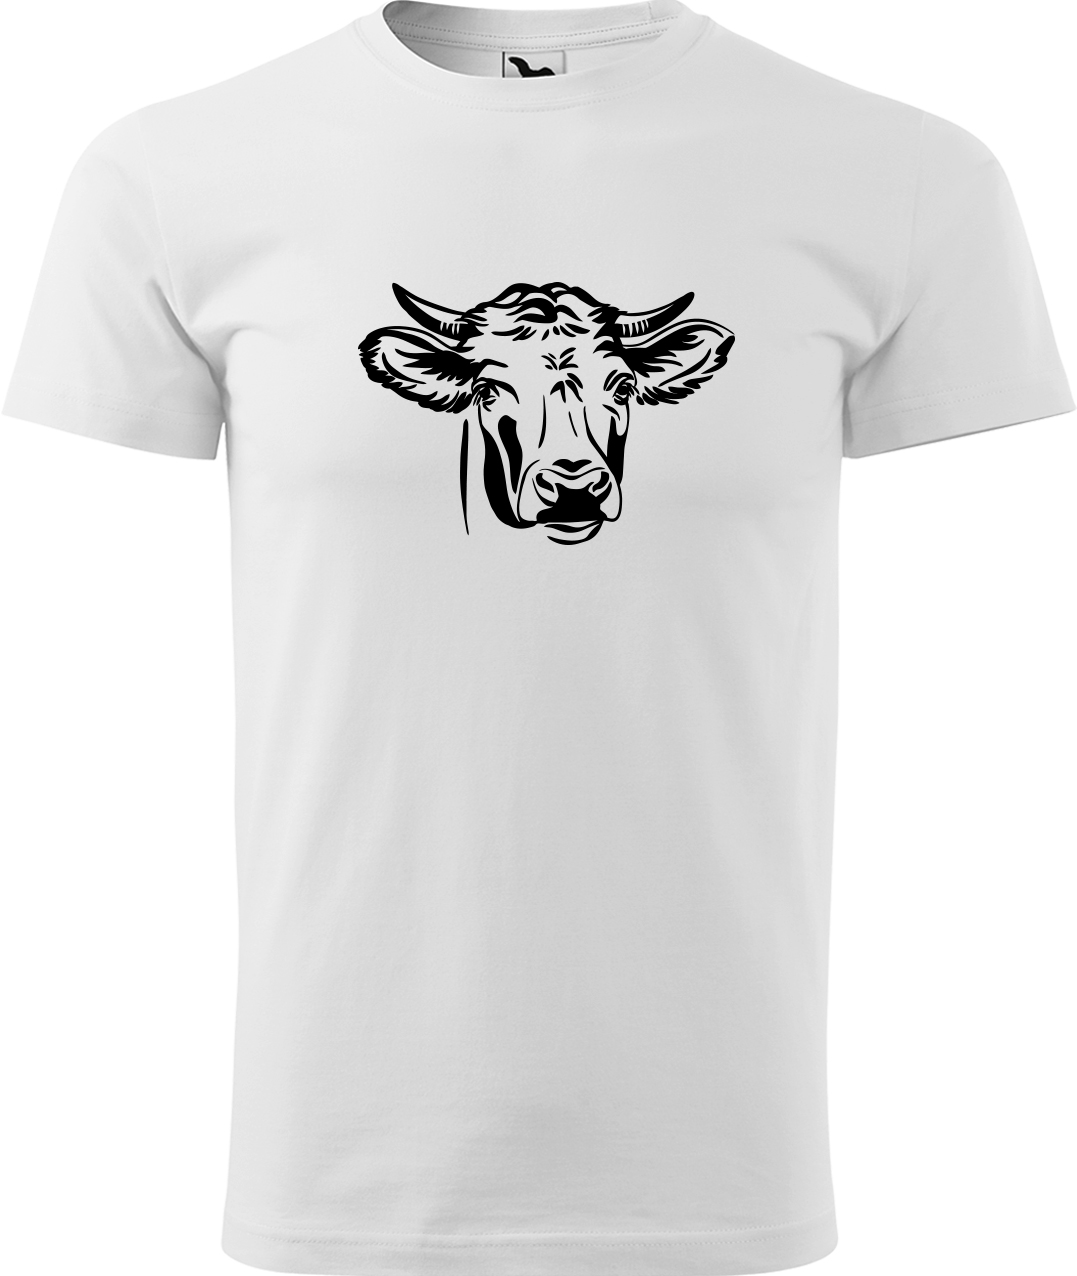 Pánské tričko s krávou - Hlava krávy Velikost: L, Barva: Bílá (00), Střih: pánský